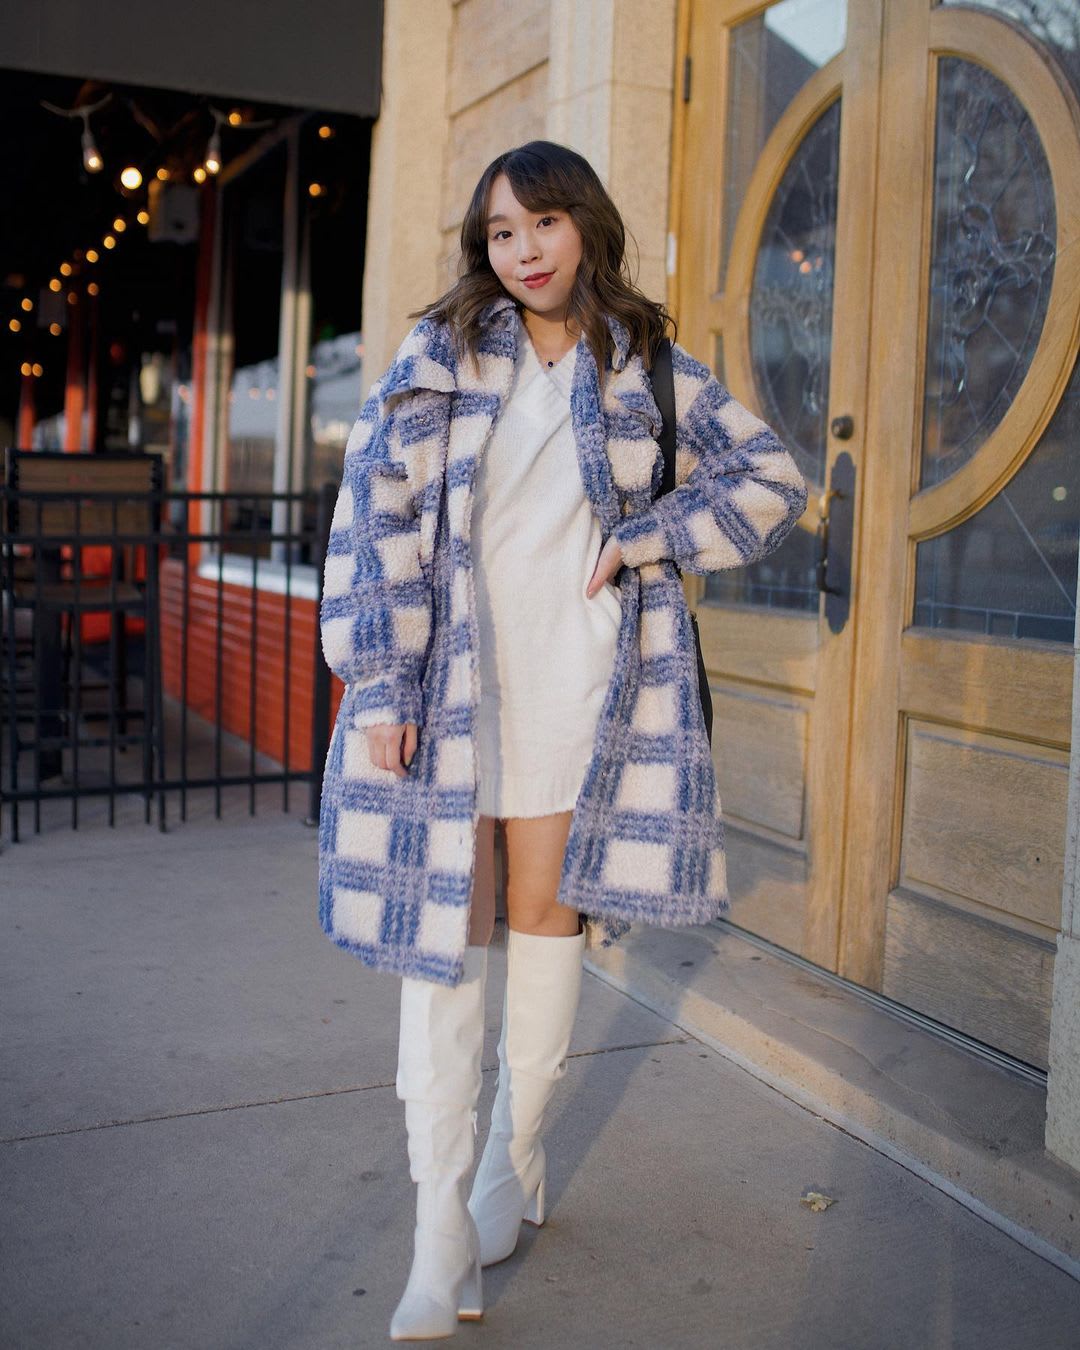 Sexy Winter Outfits To Copy This Season - Lulus.com Fashion Blog